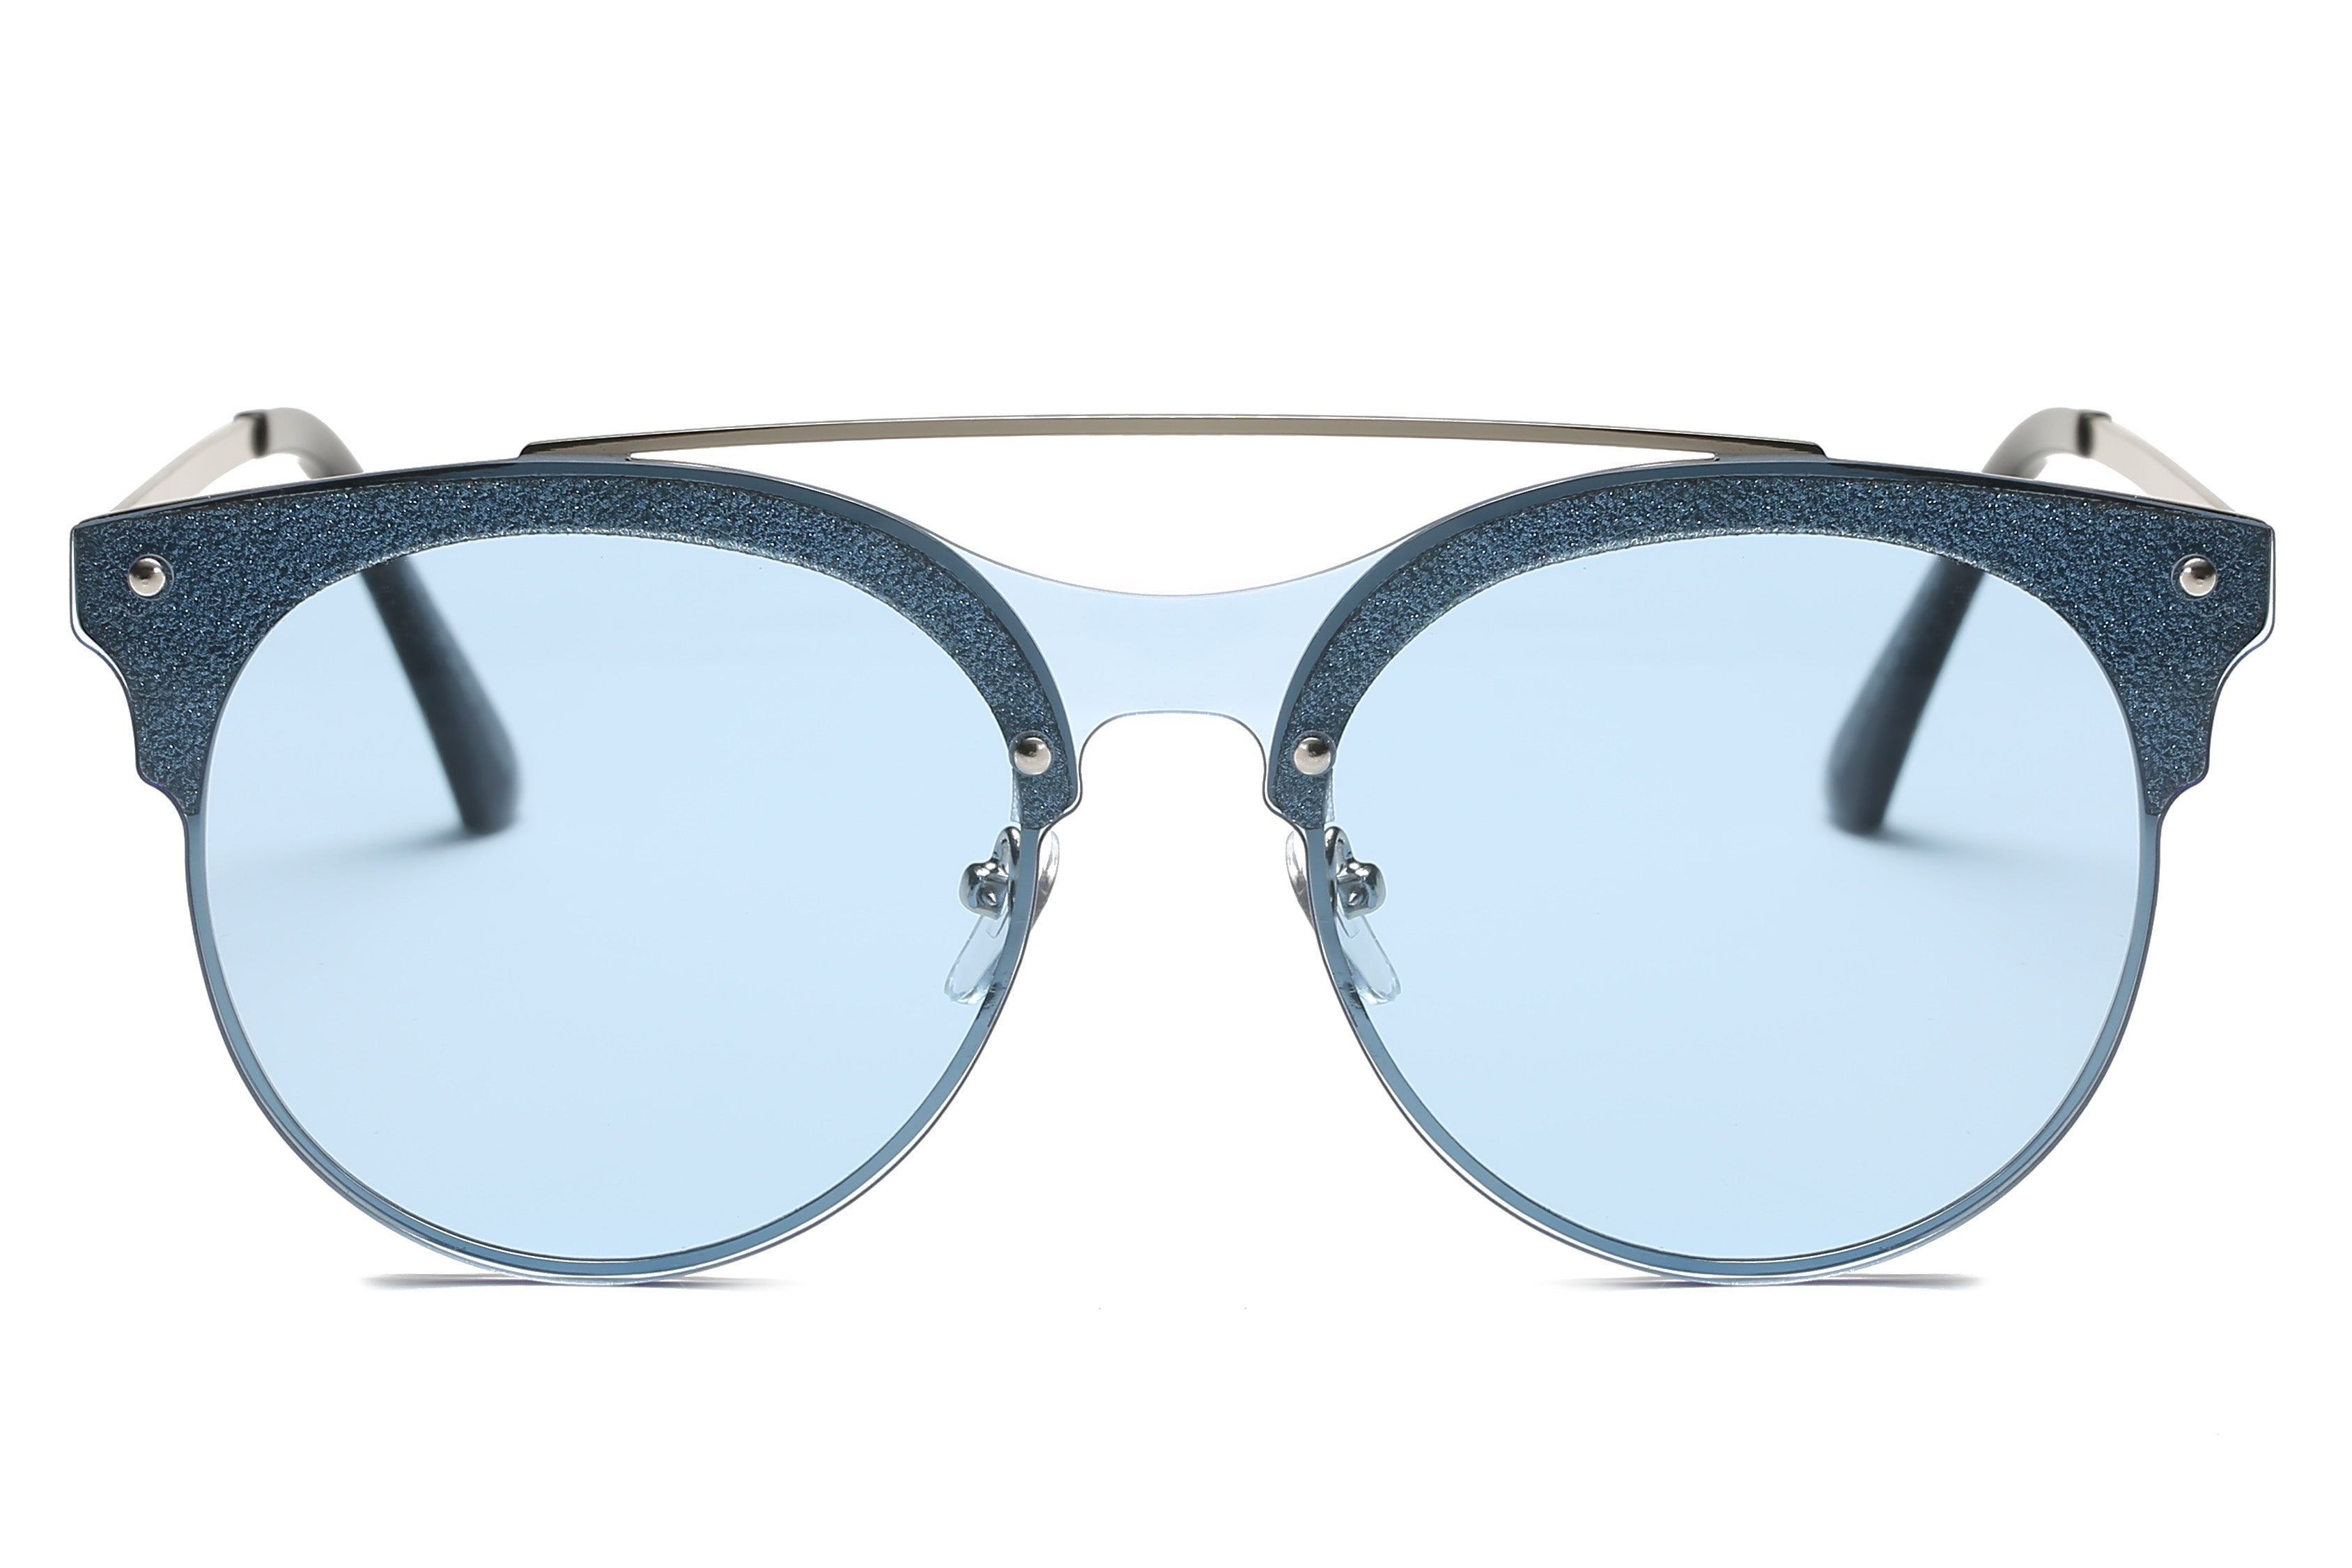 S3011 - Round Circle Brow-Bar Tinted Lens Sunglasses - Iris Fashion Inc. | Wholesale Sunglasses and Glasses